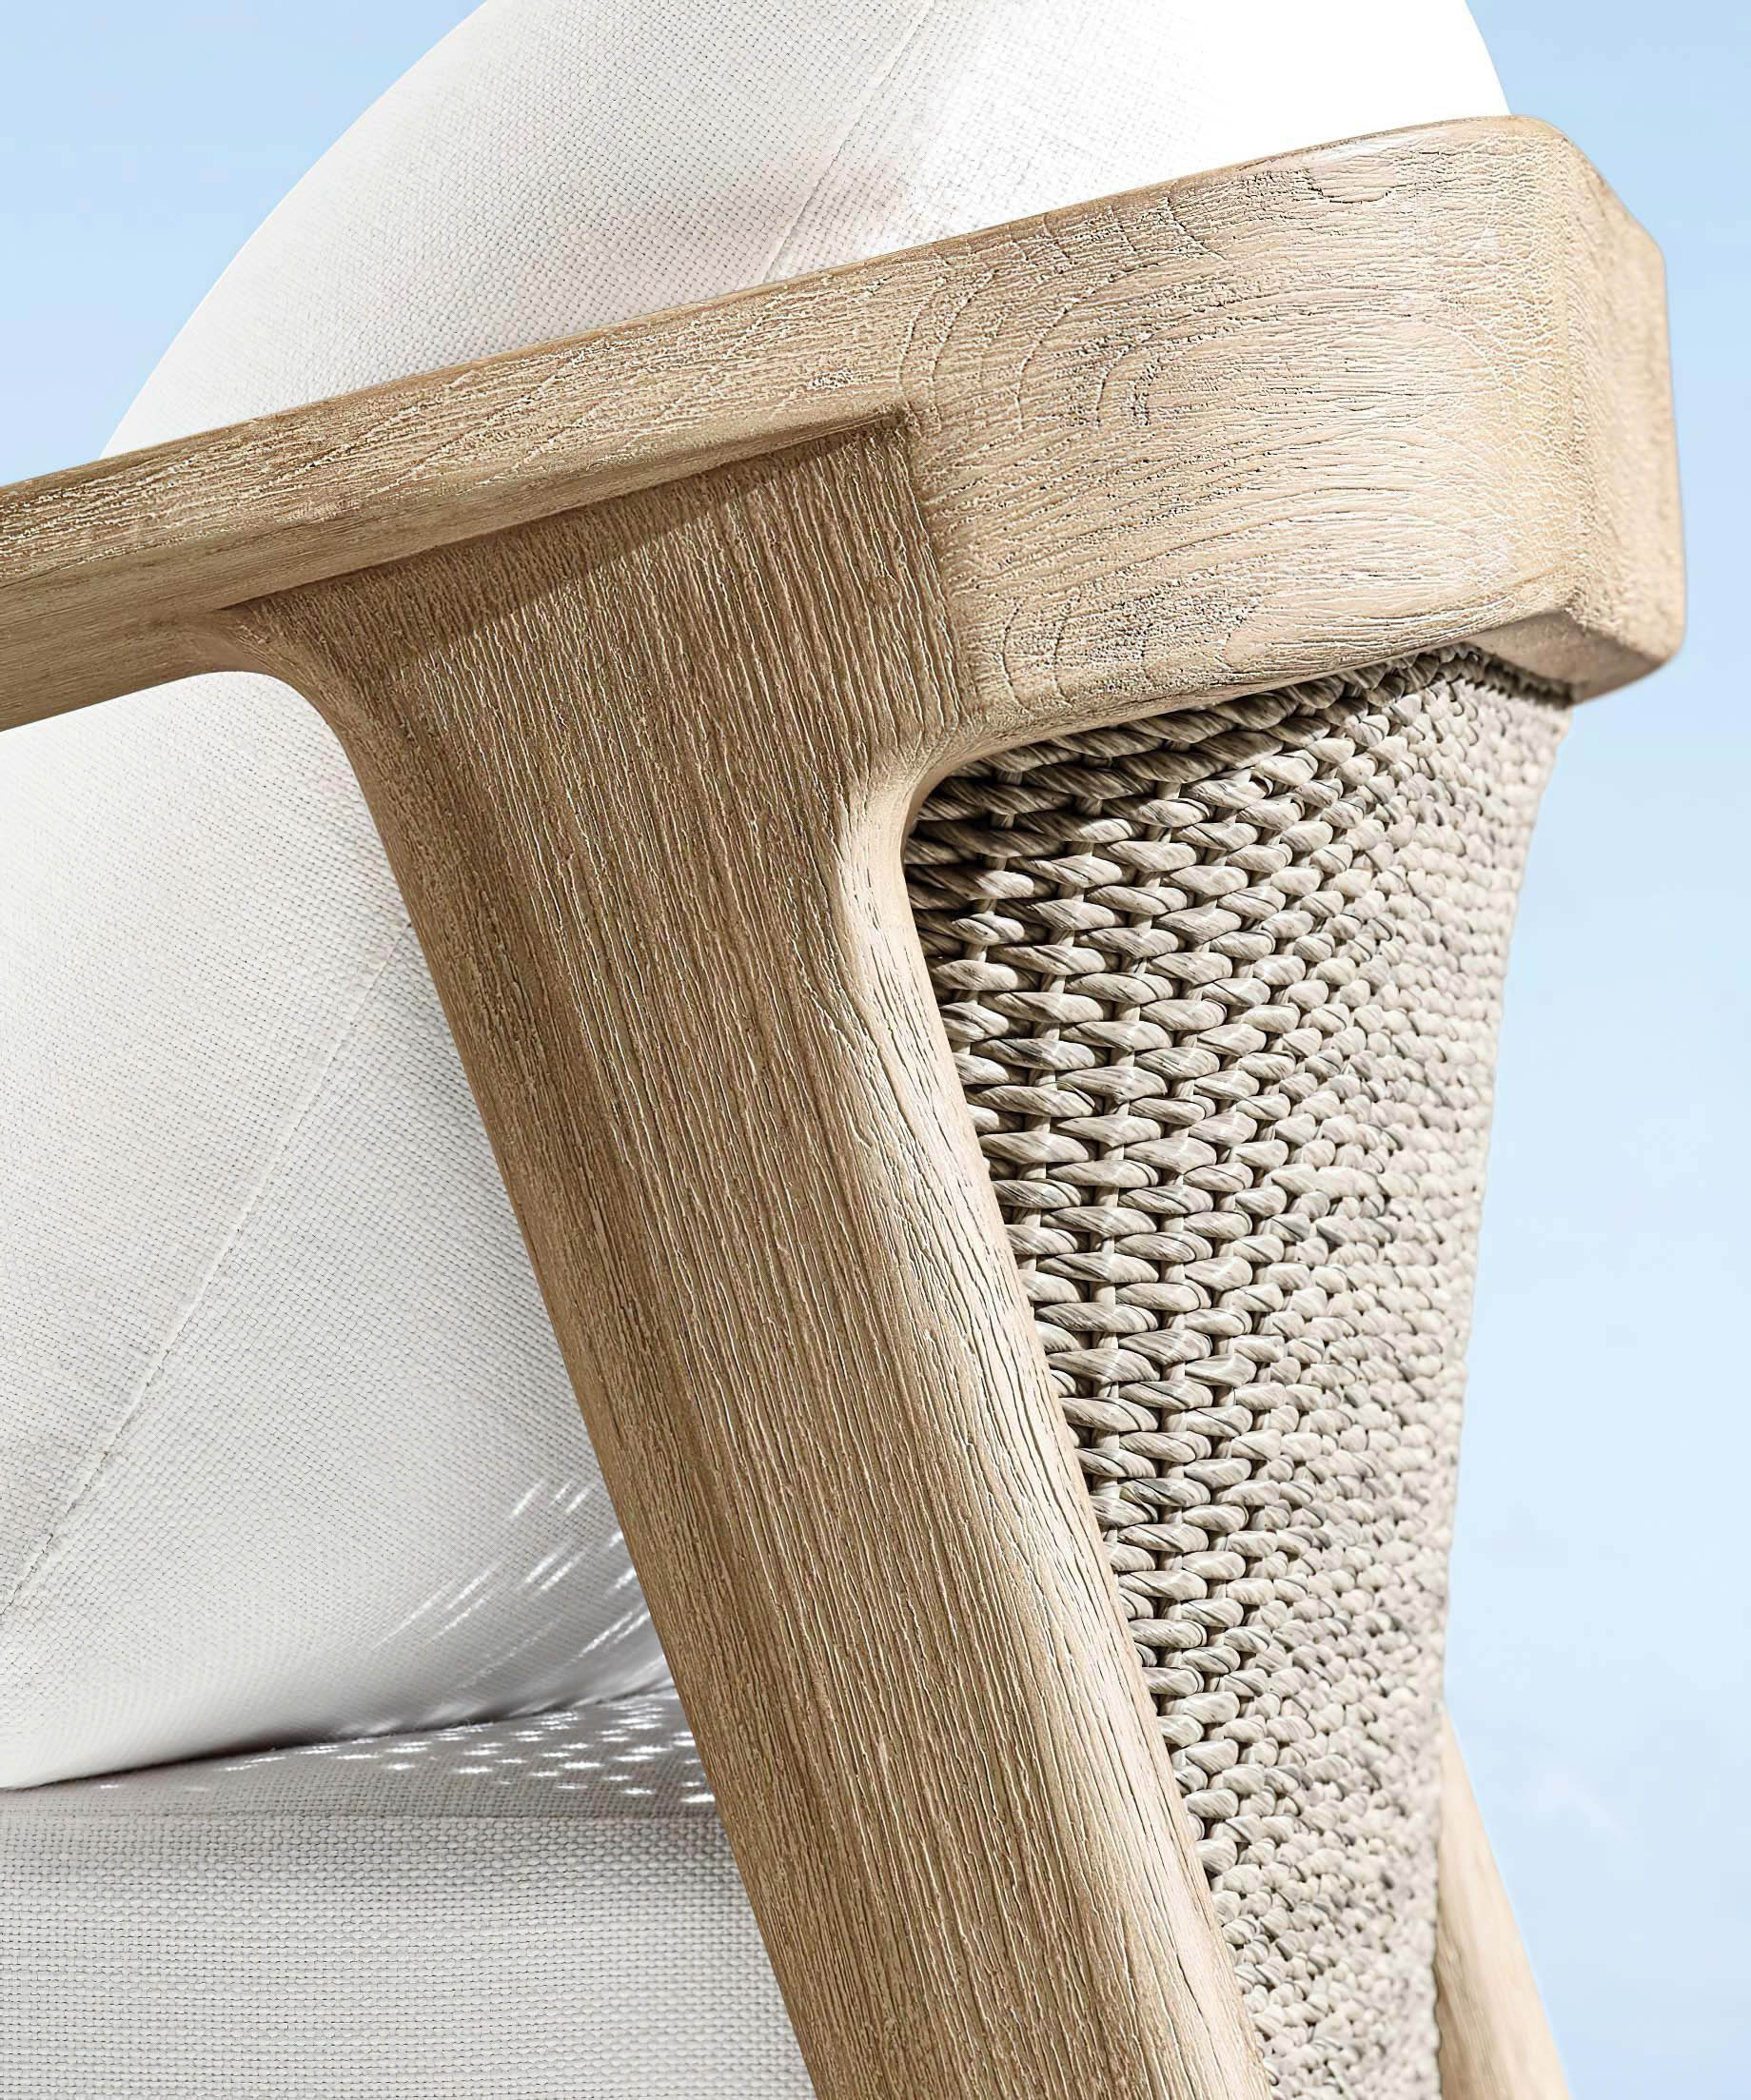 Malta Teak Collection Outdoor Furniture Design for RH – Ramon Esteve – Crafted Premium Teak